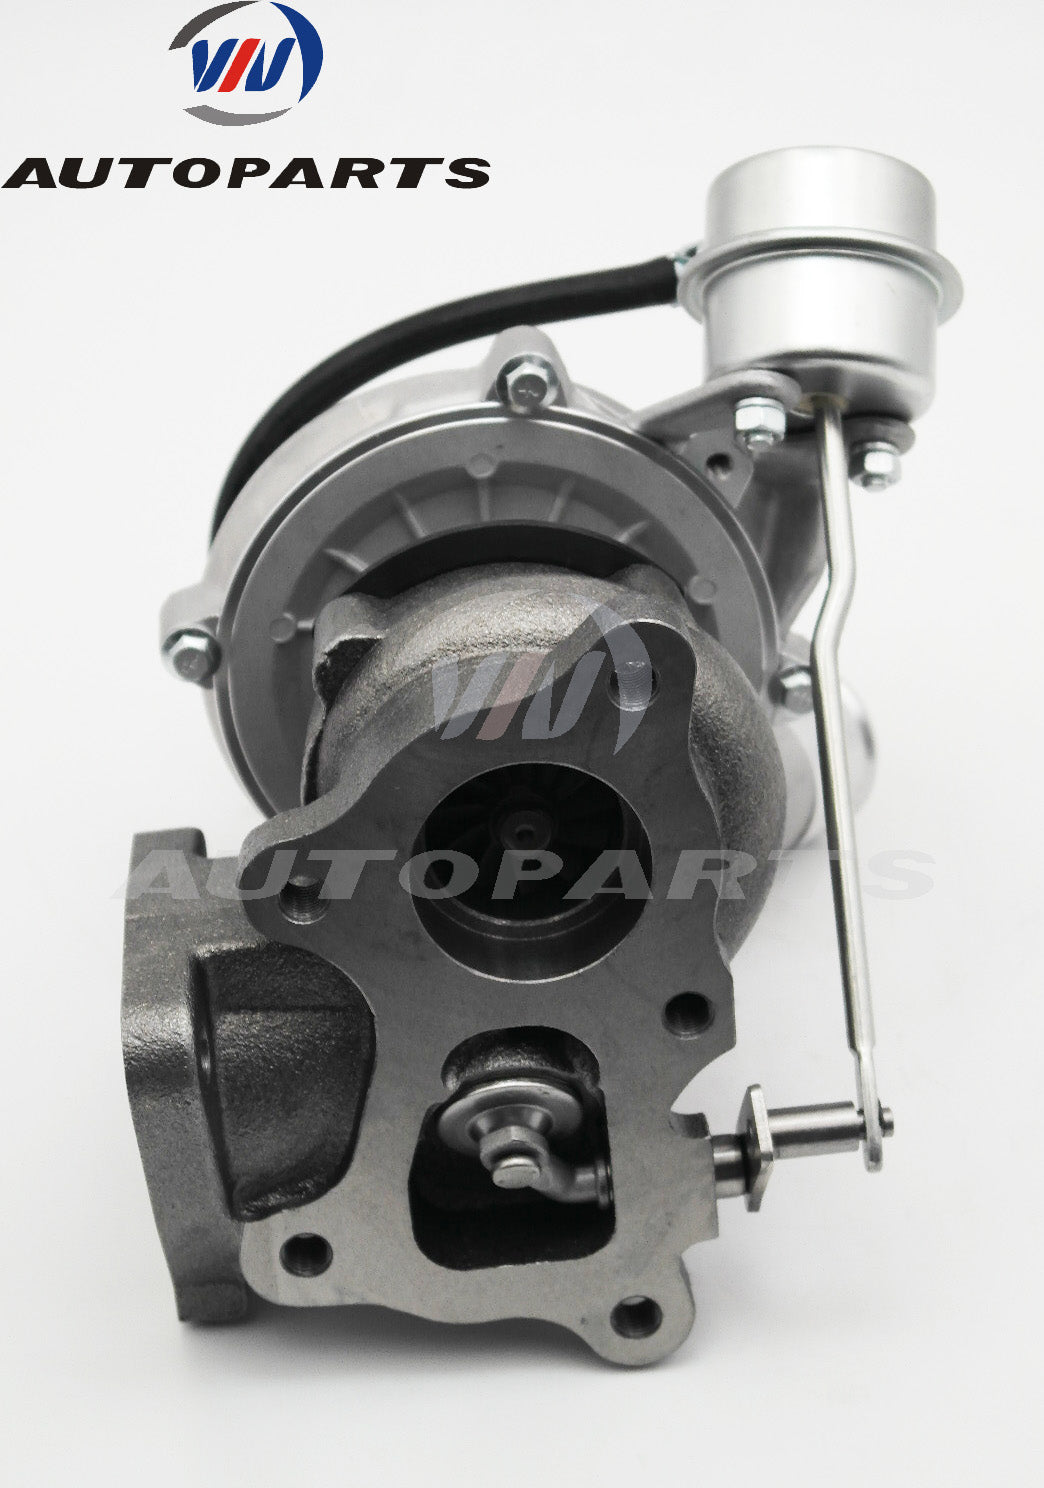 Turbocharger 715924-5003S for Kia varies 2.5L 4D56TCI Diesel Engine